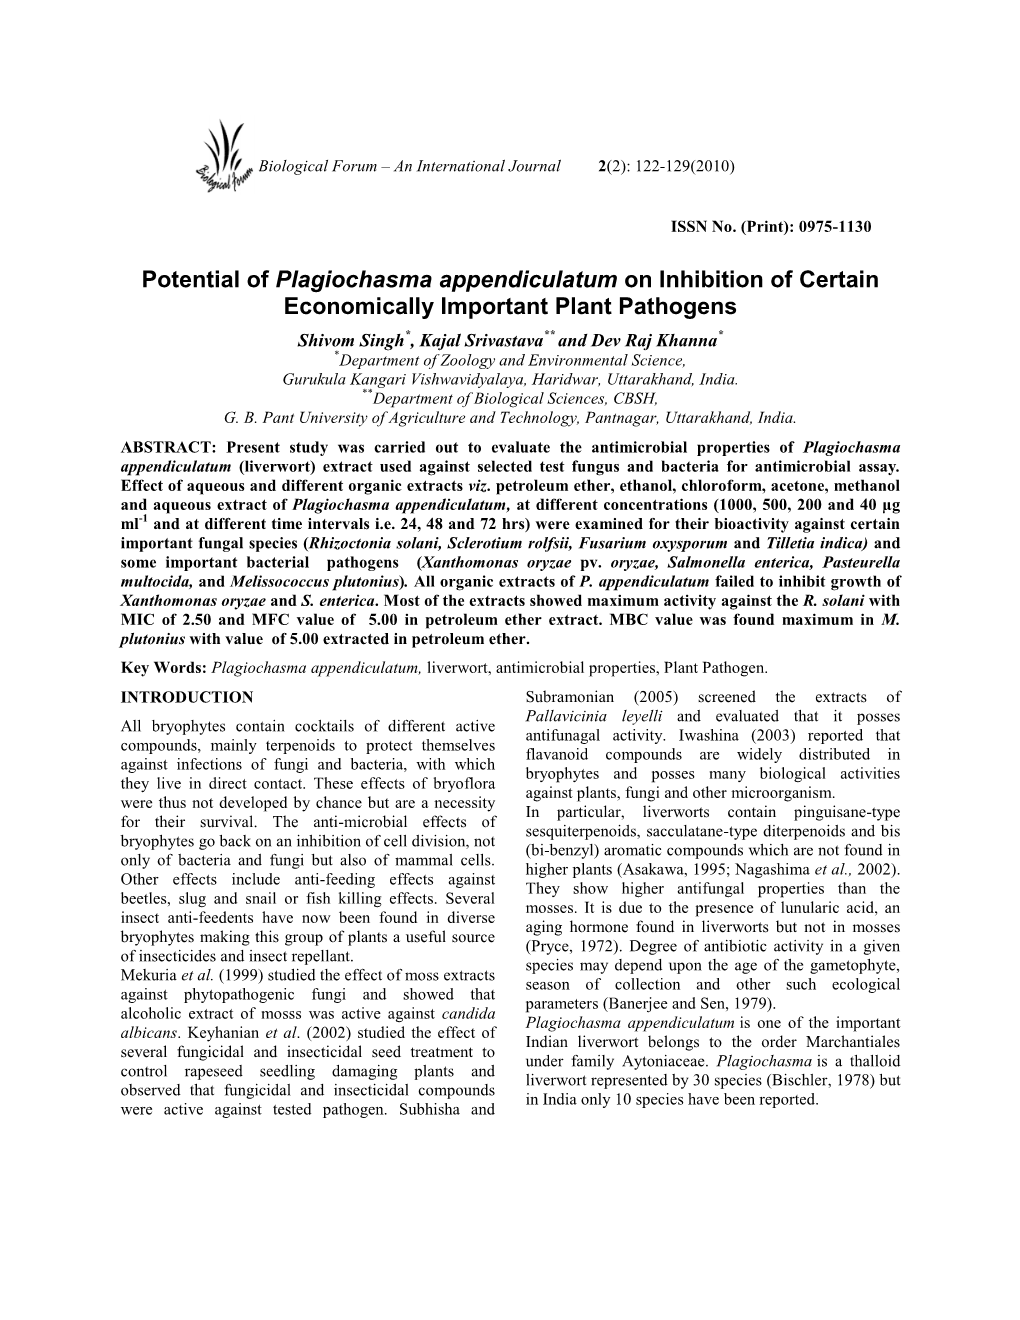 Potential of Plagiochasma Appendiculatum on Inhibition Of